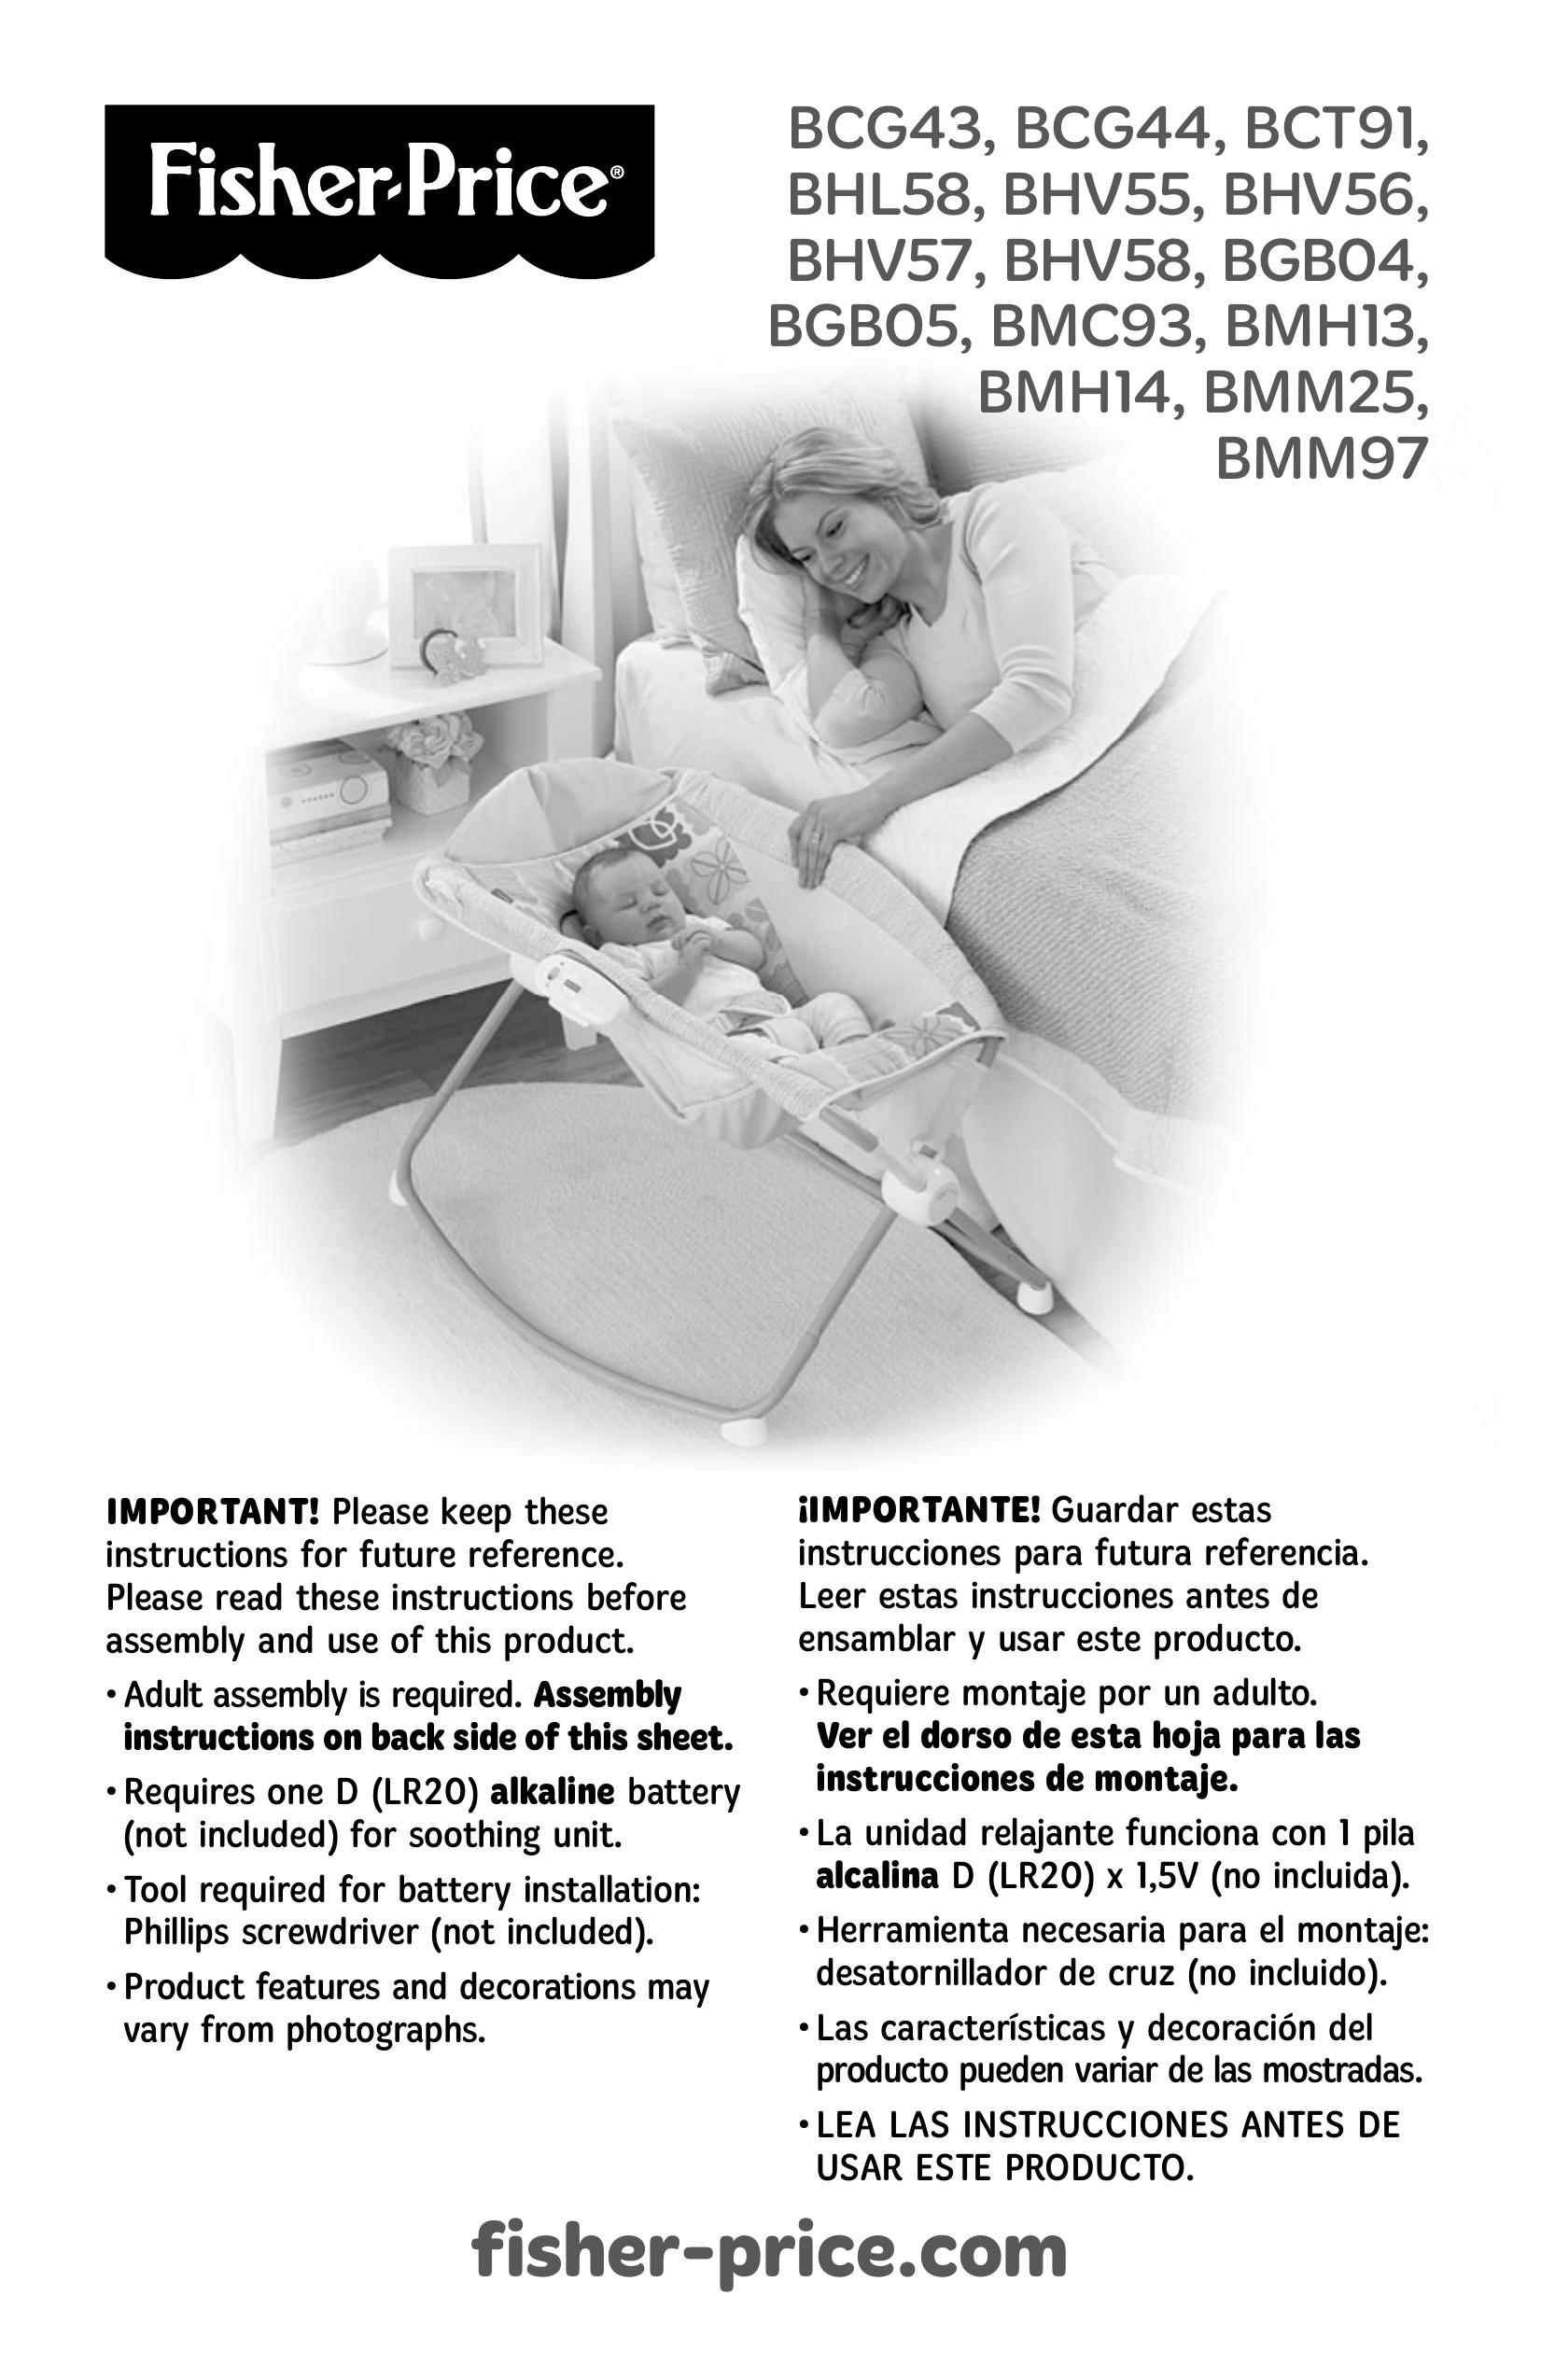 Fisher-Price BGB05 Sleep Apnea Machine User Manual